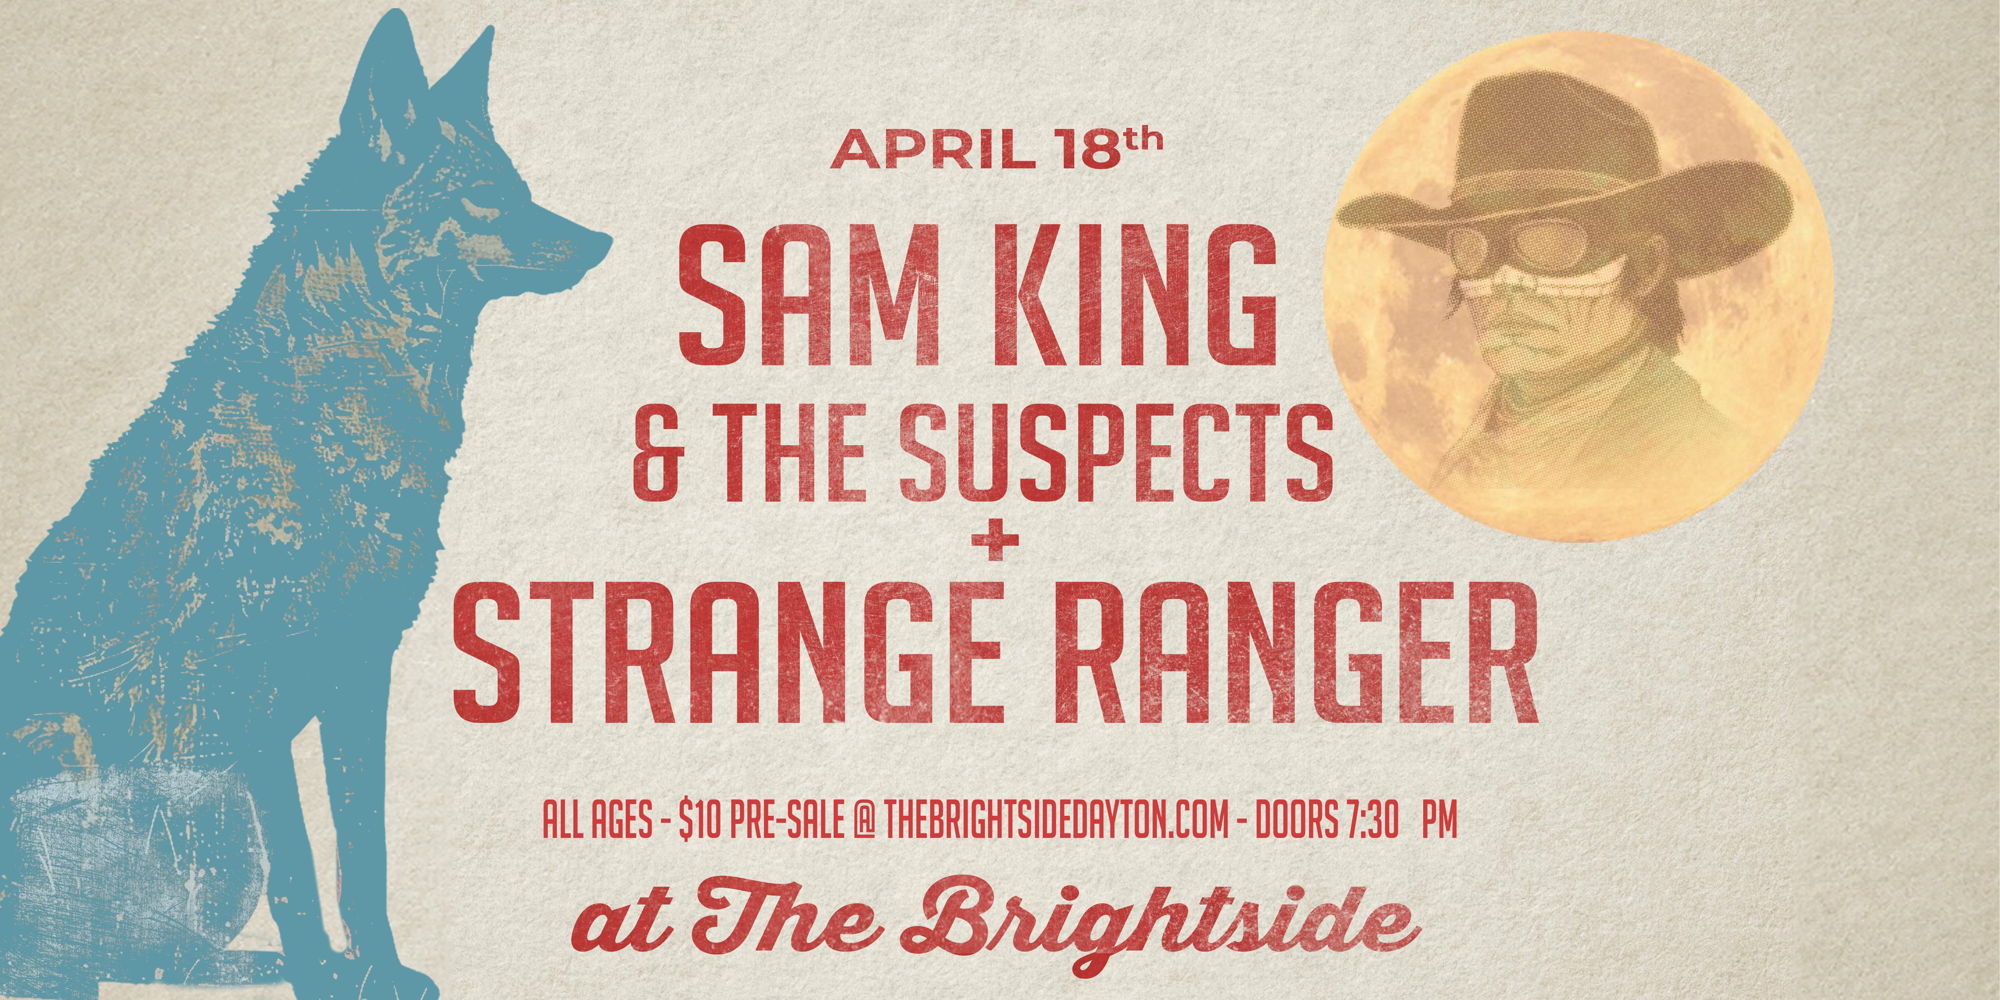 Strange Ranger + Sam King & The Suspects promotional image